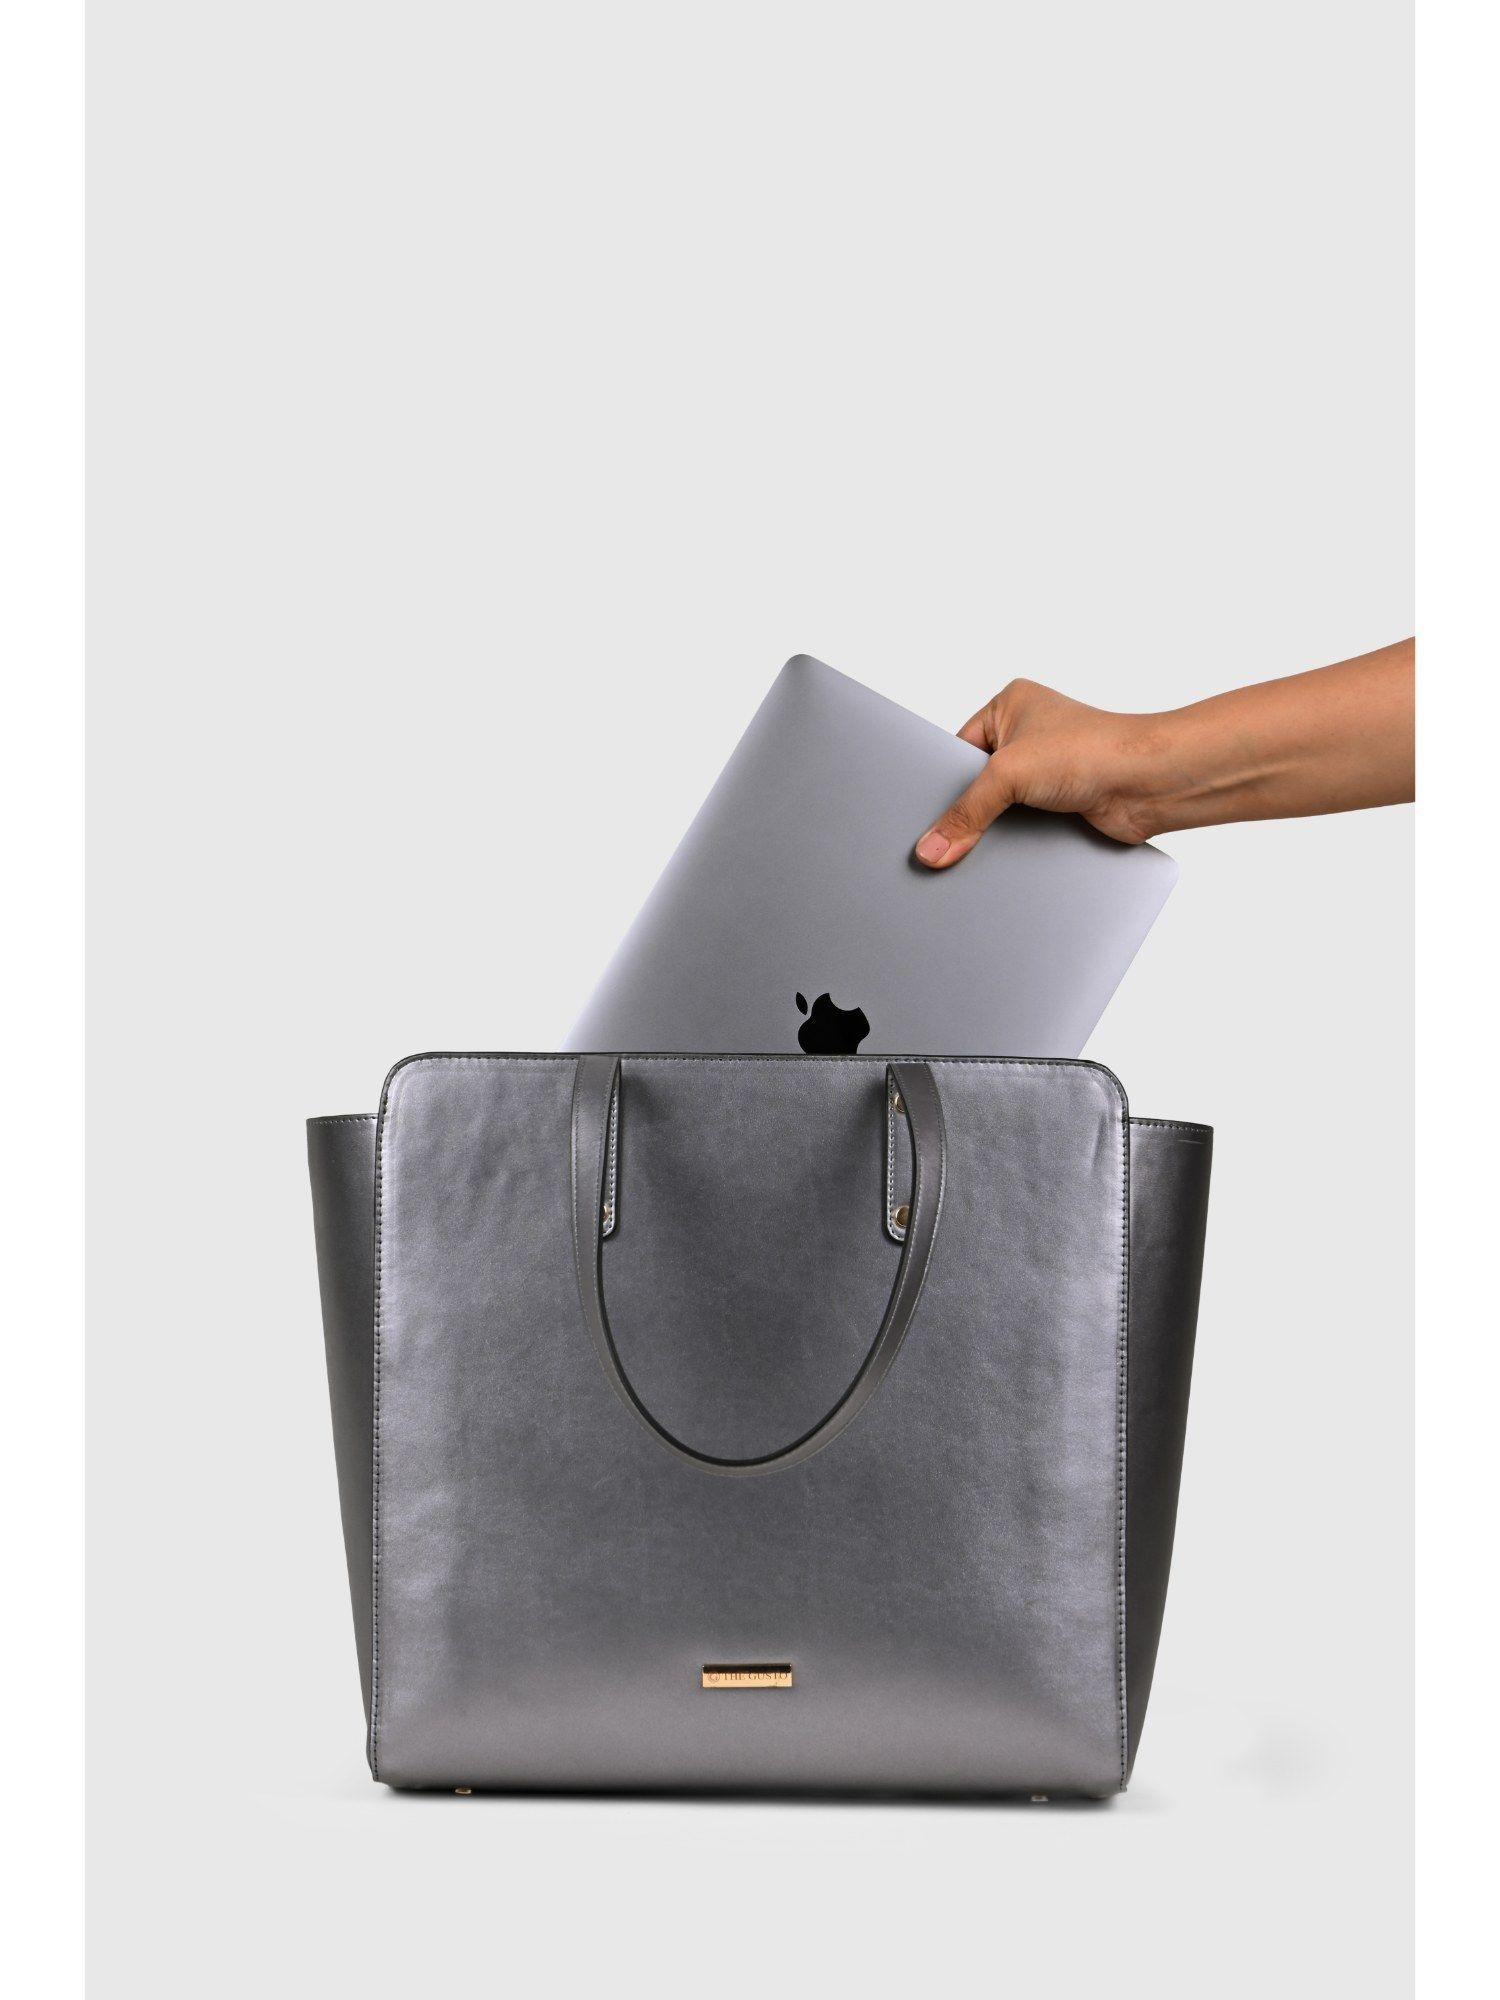 beyond plus tote bag with zipper -grey (m)